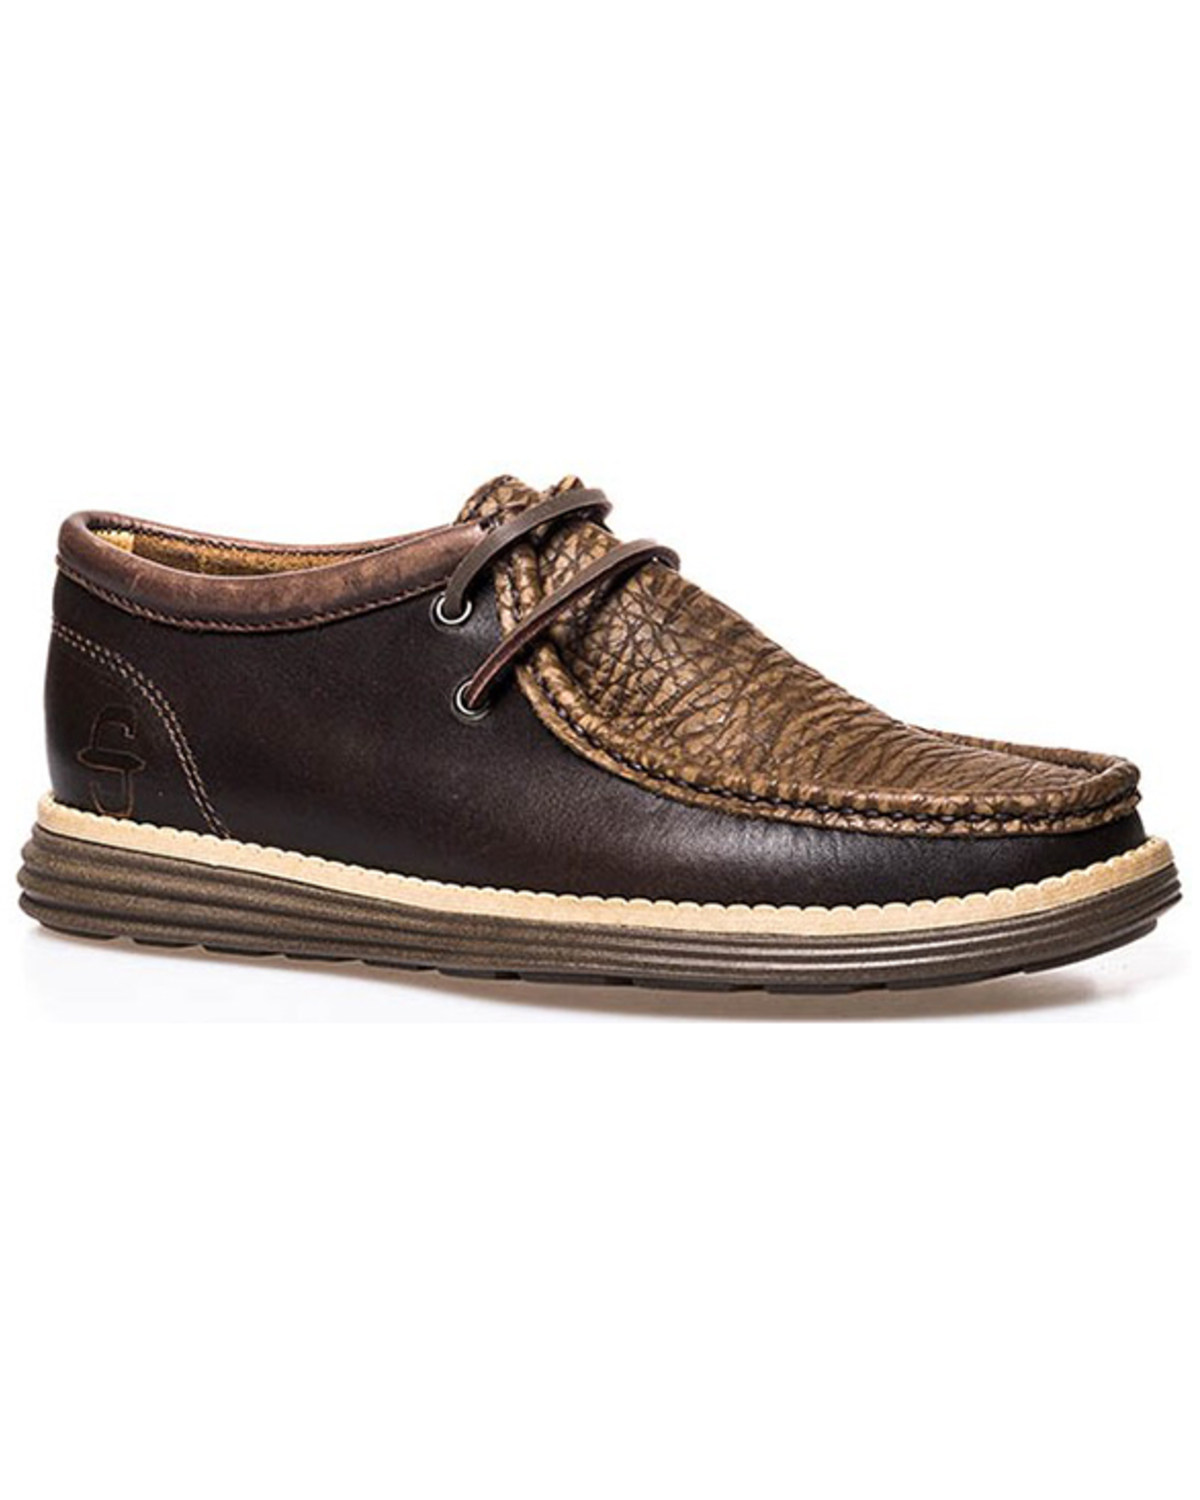 Stetson Men's Wyatt Oily Leather Casual Chukka Shoes - Moc Toe